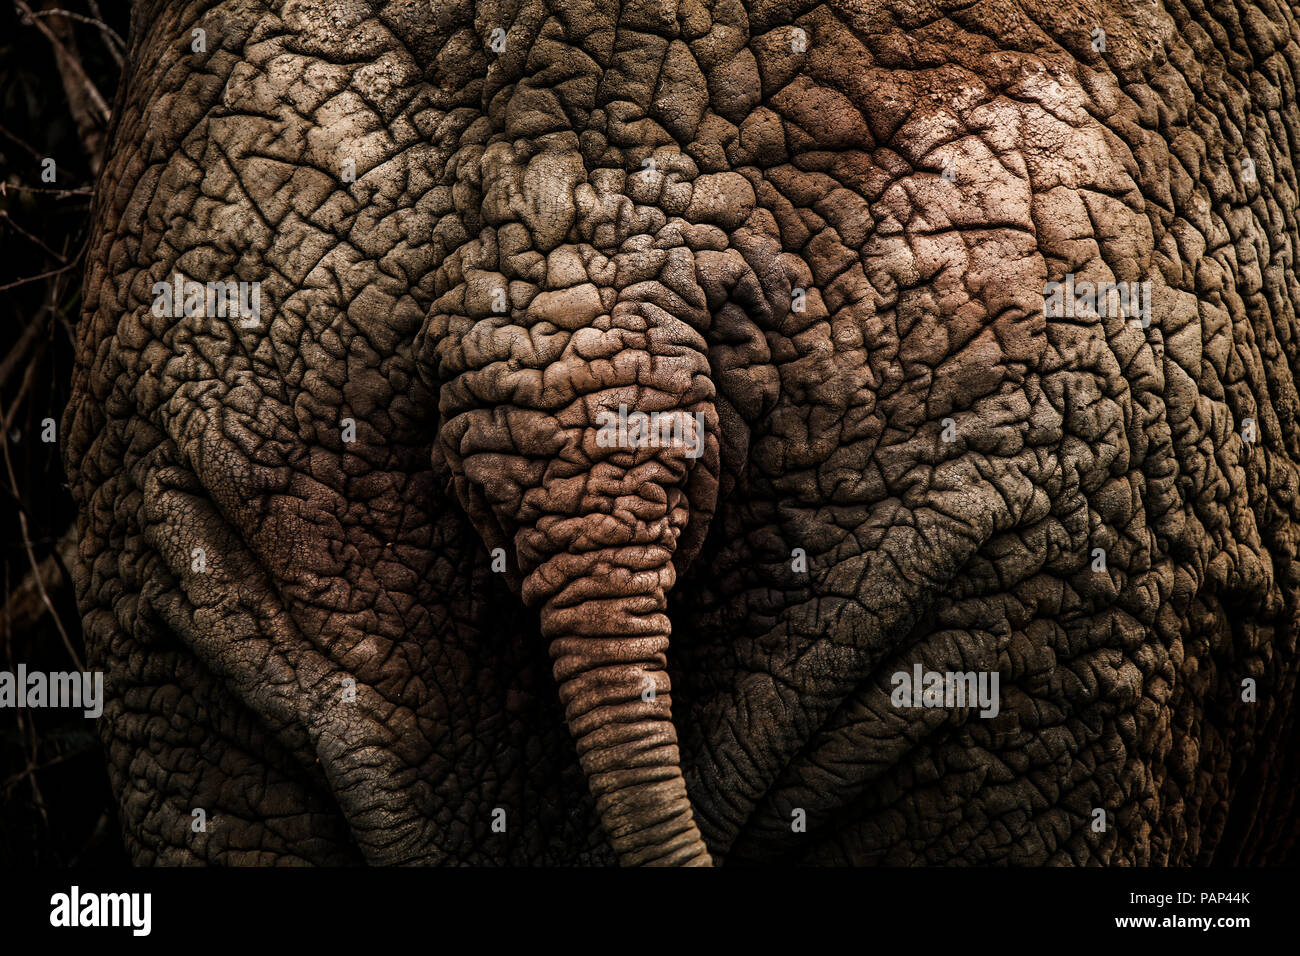 Uganda, African elephant, rear view, close-up Stock Photo